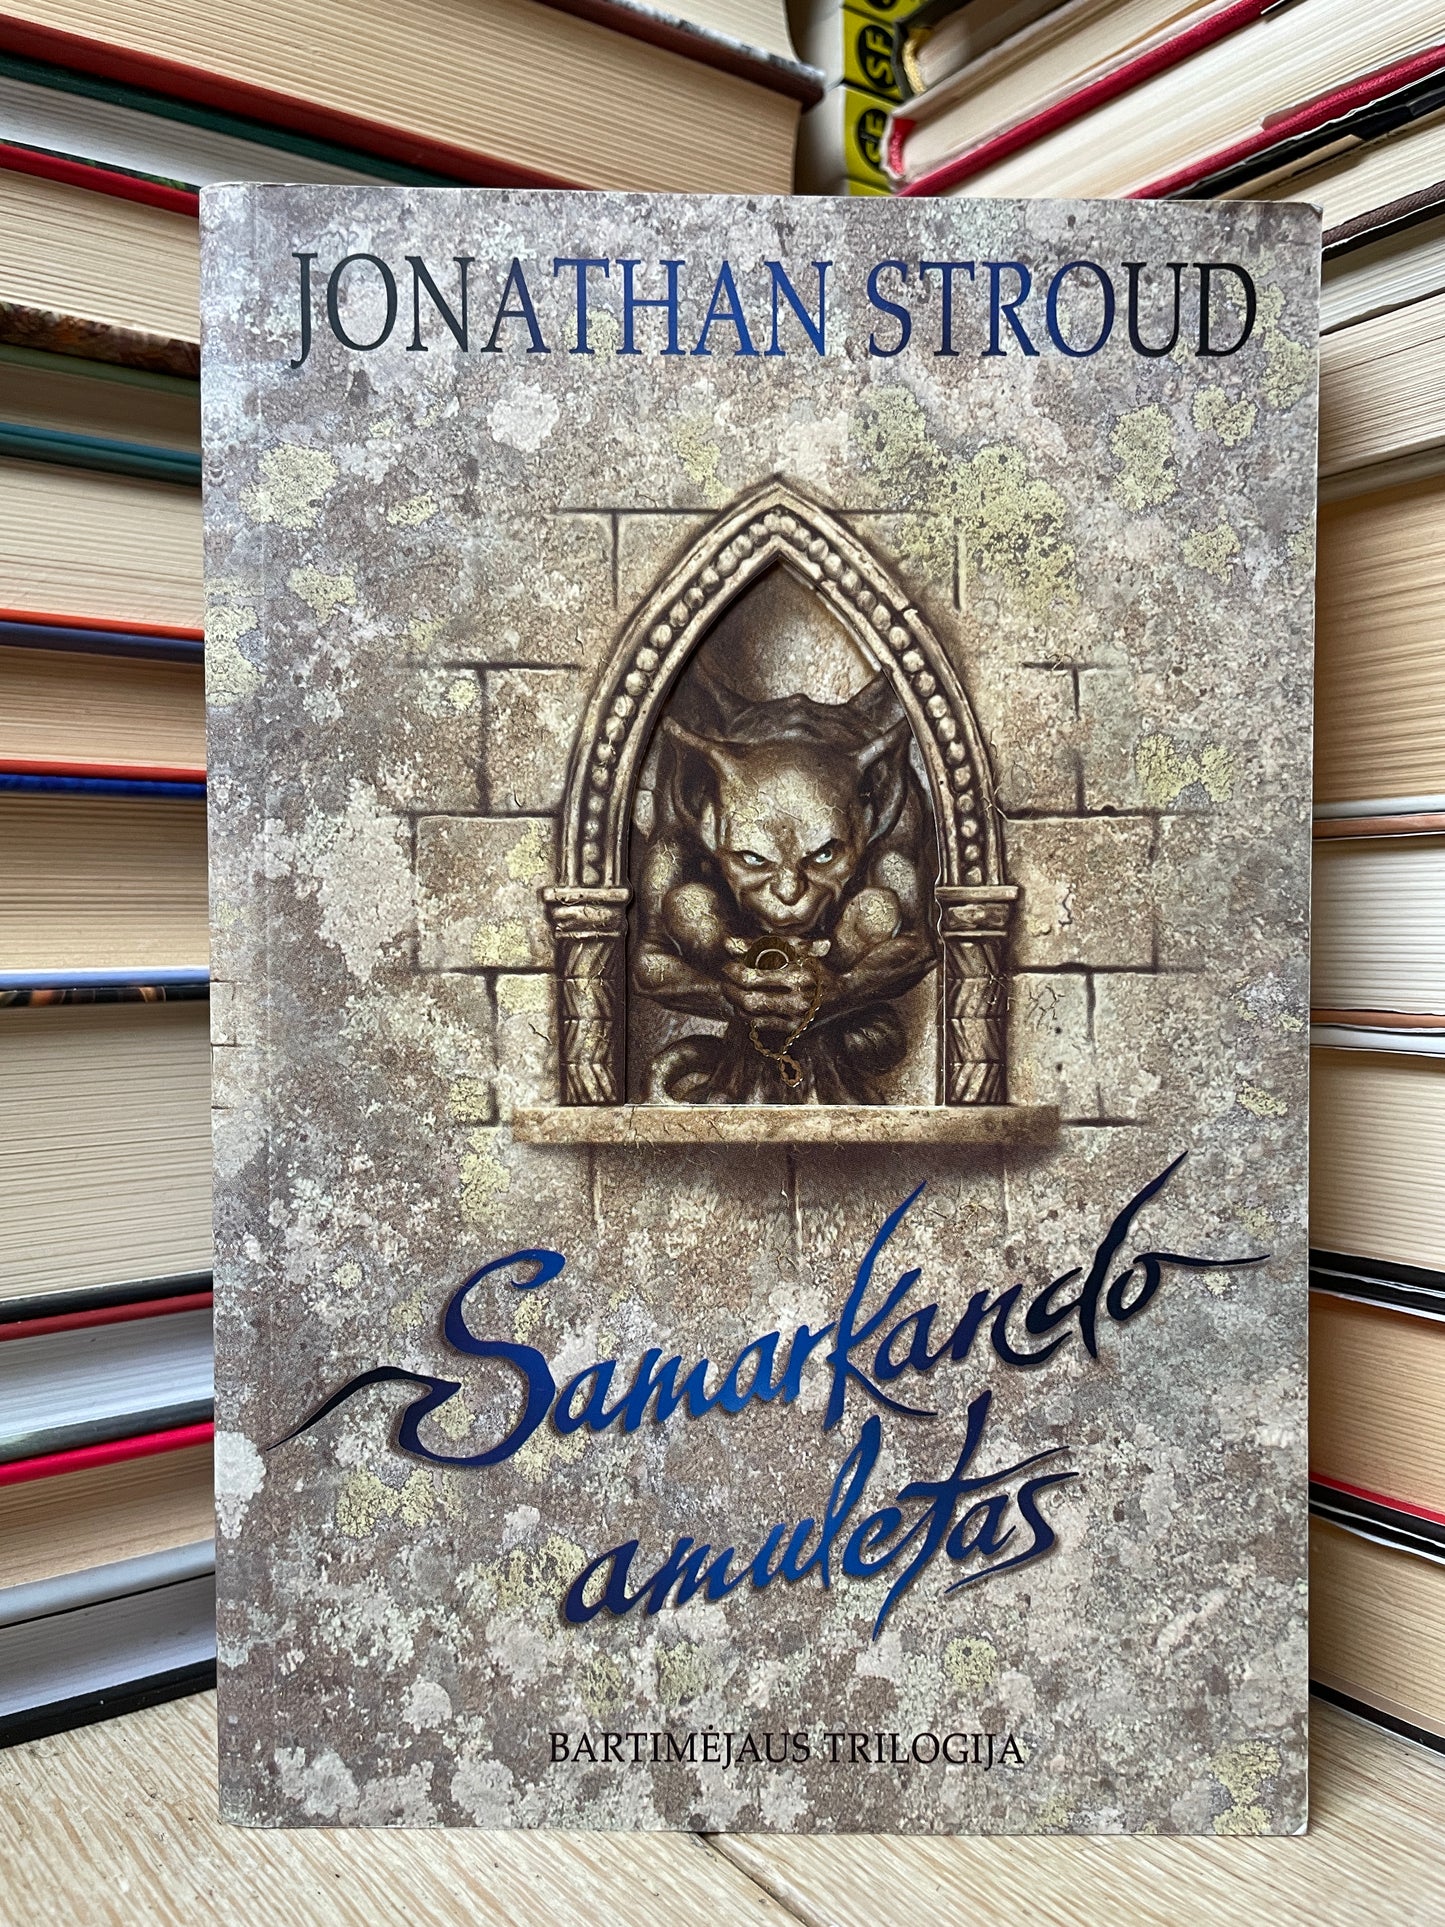 Jonathan Stroud - ,,Samarkando amuletas"